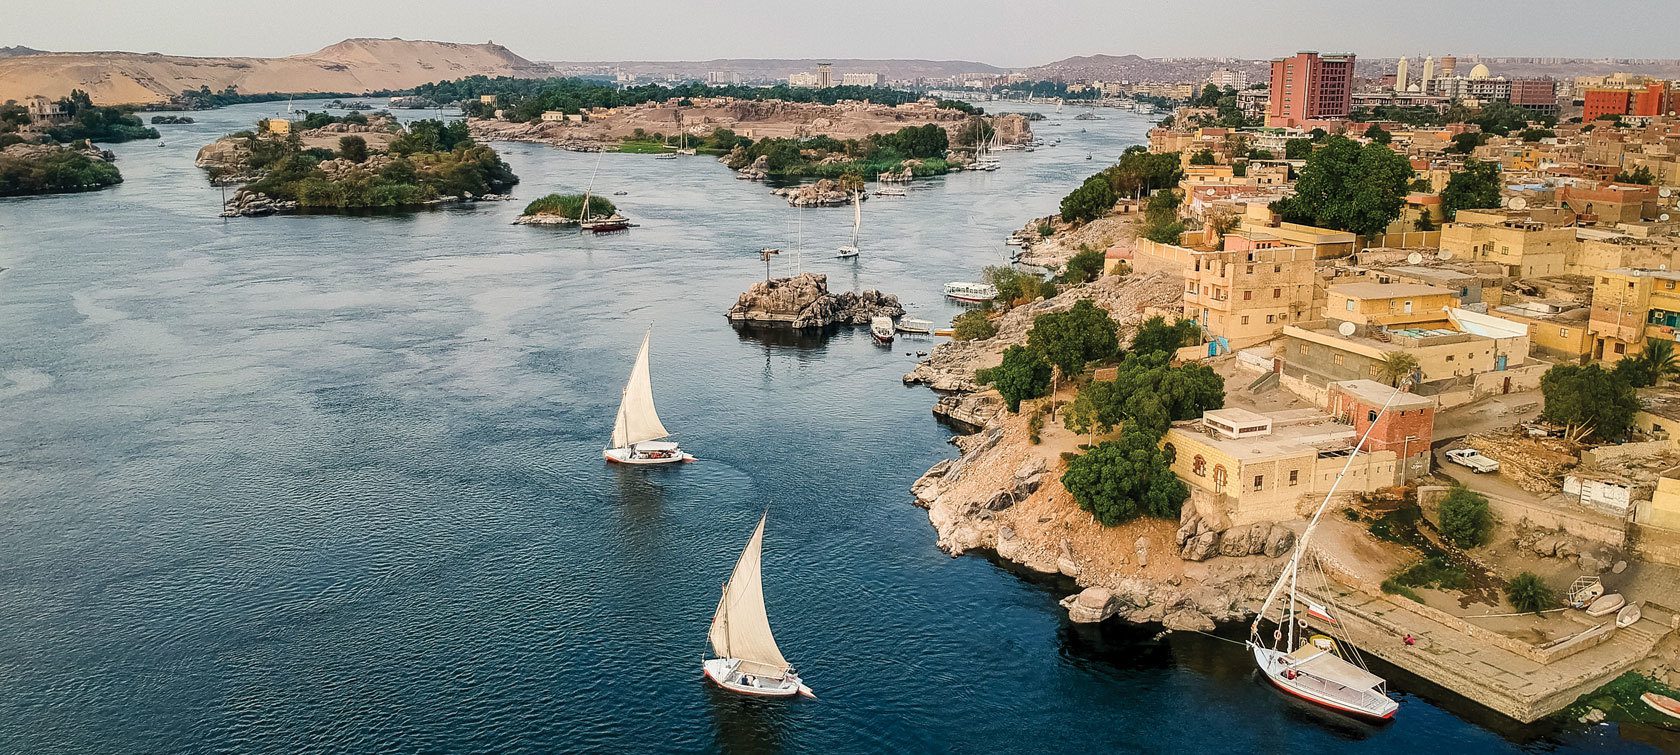 The Nile, Egypt. Credit: Abercrombie & Kent